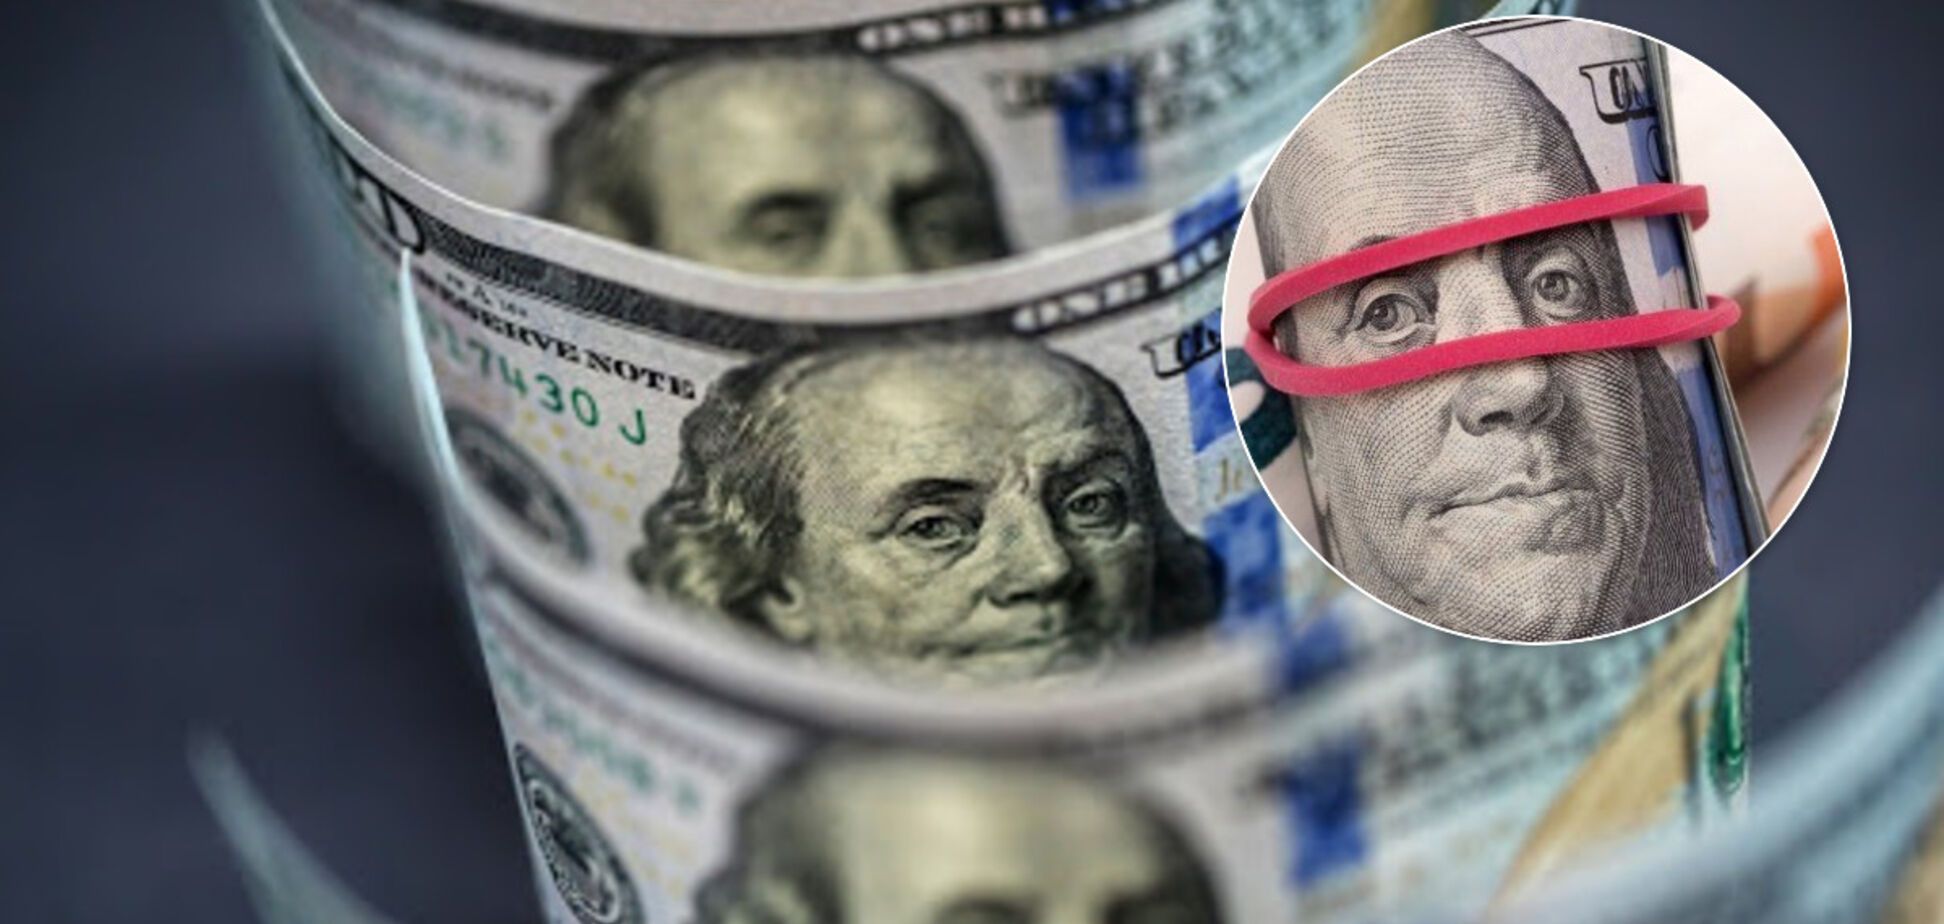 Курс доллара в Украине 